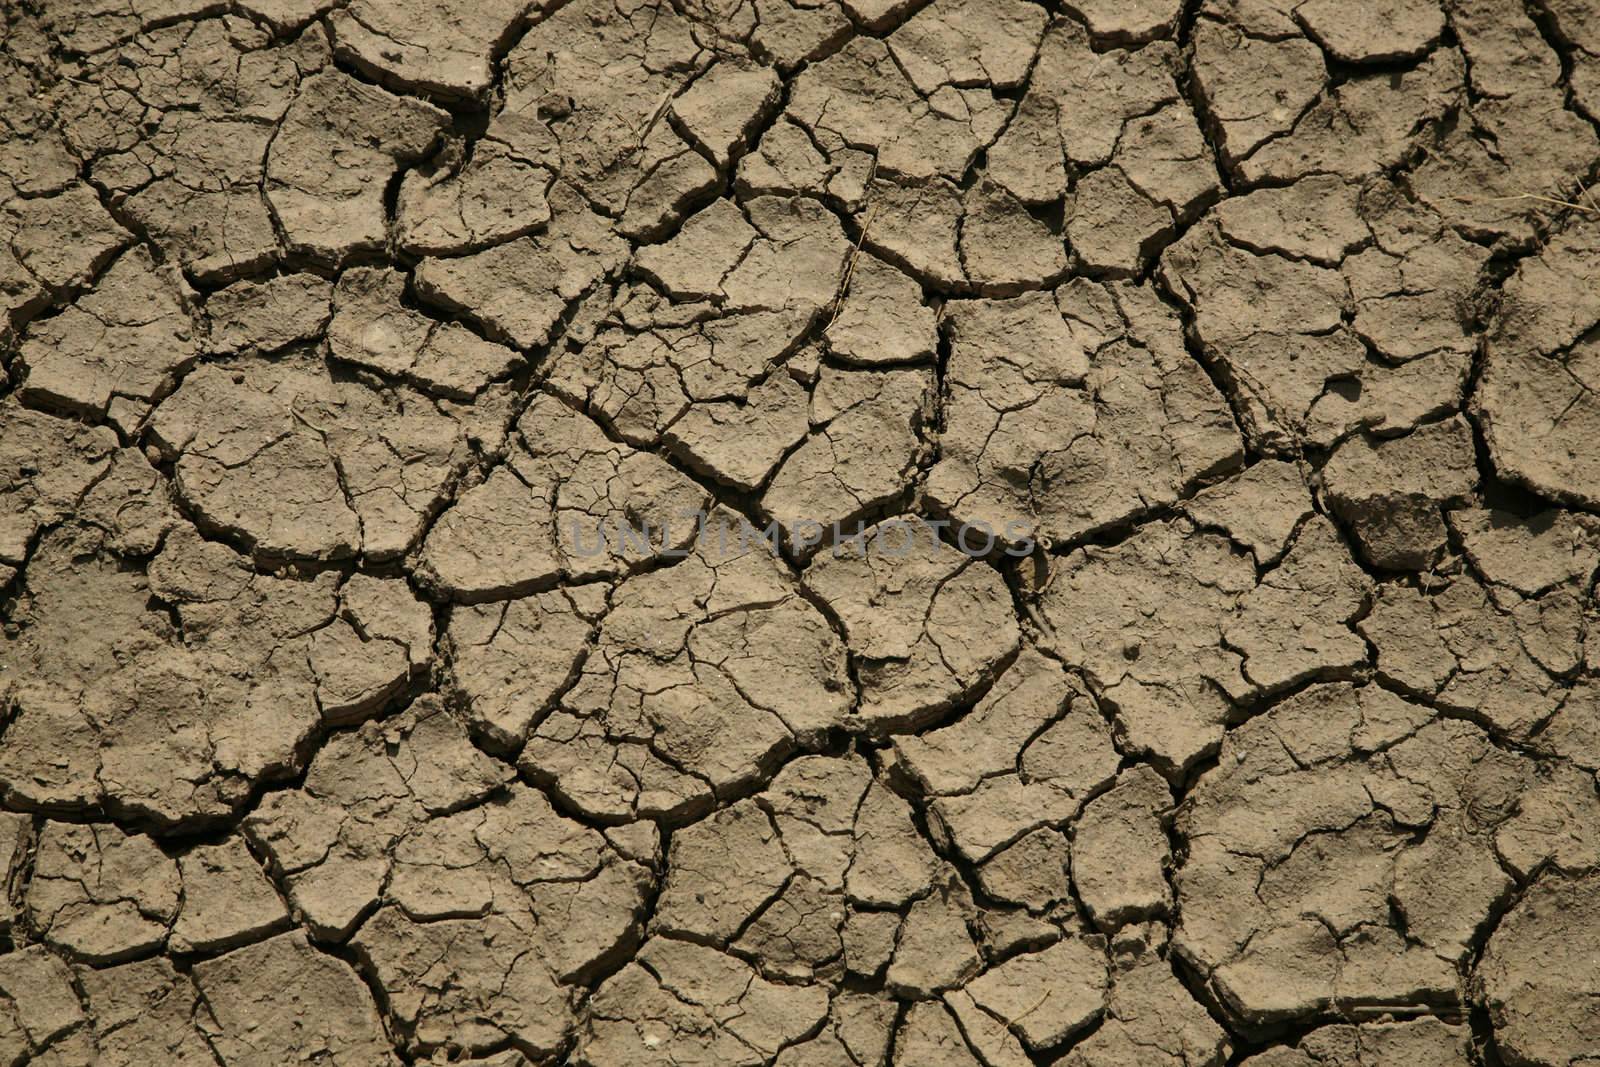 dry soil by RainerPlendl